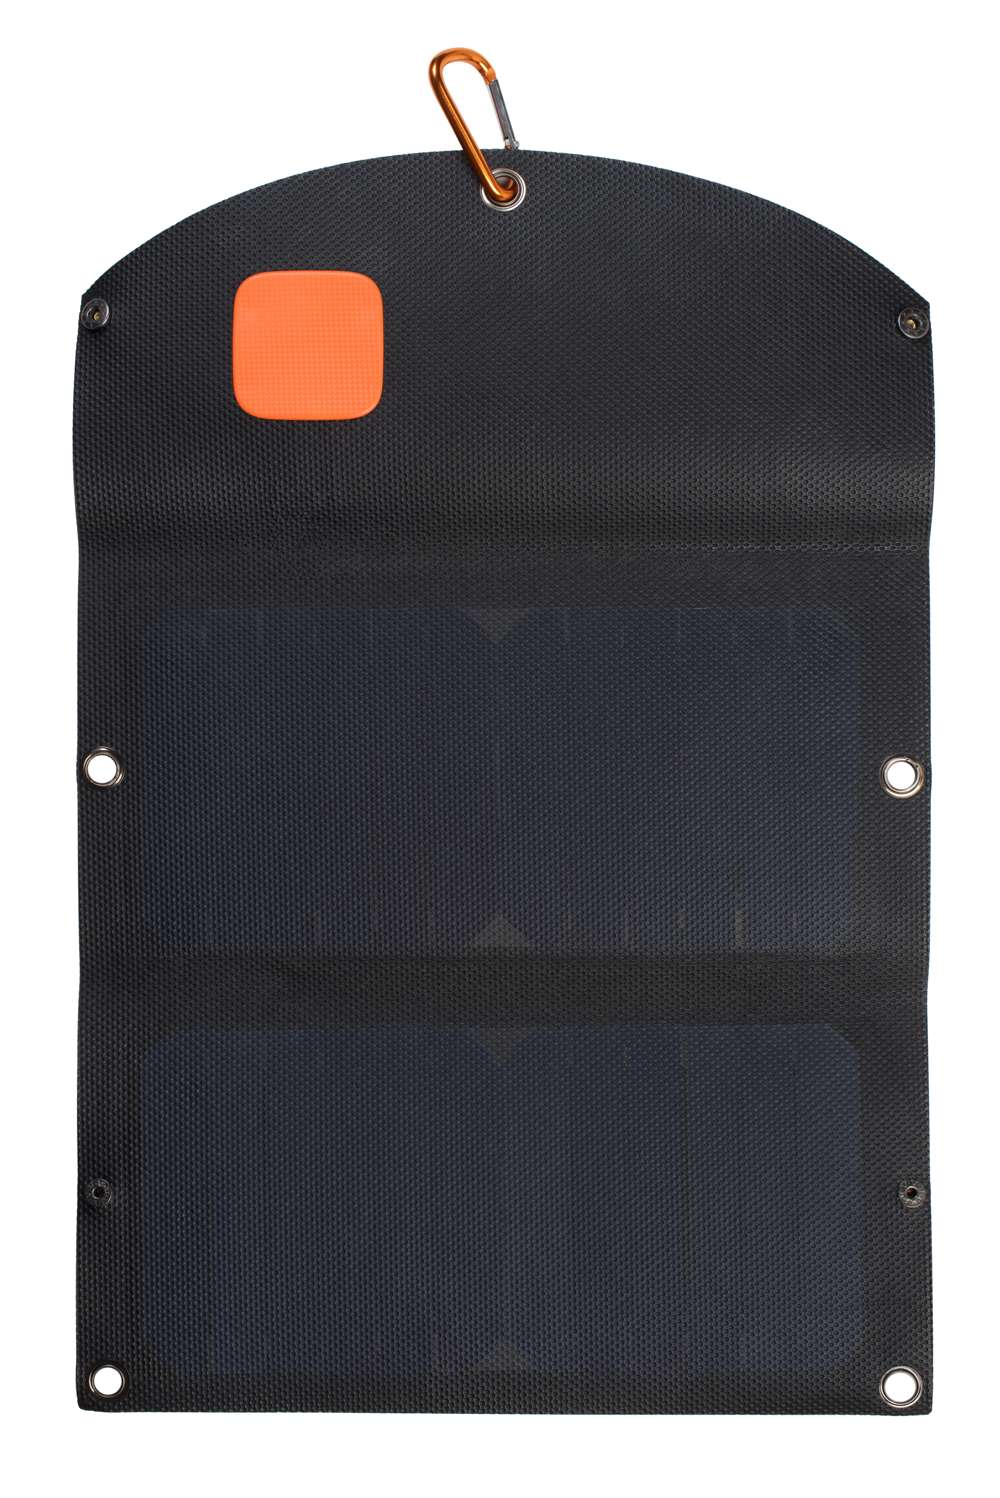 AP250 - SolarBooster 14W Panel